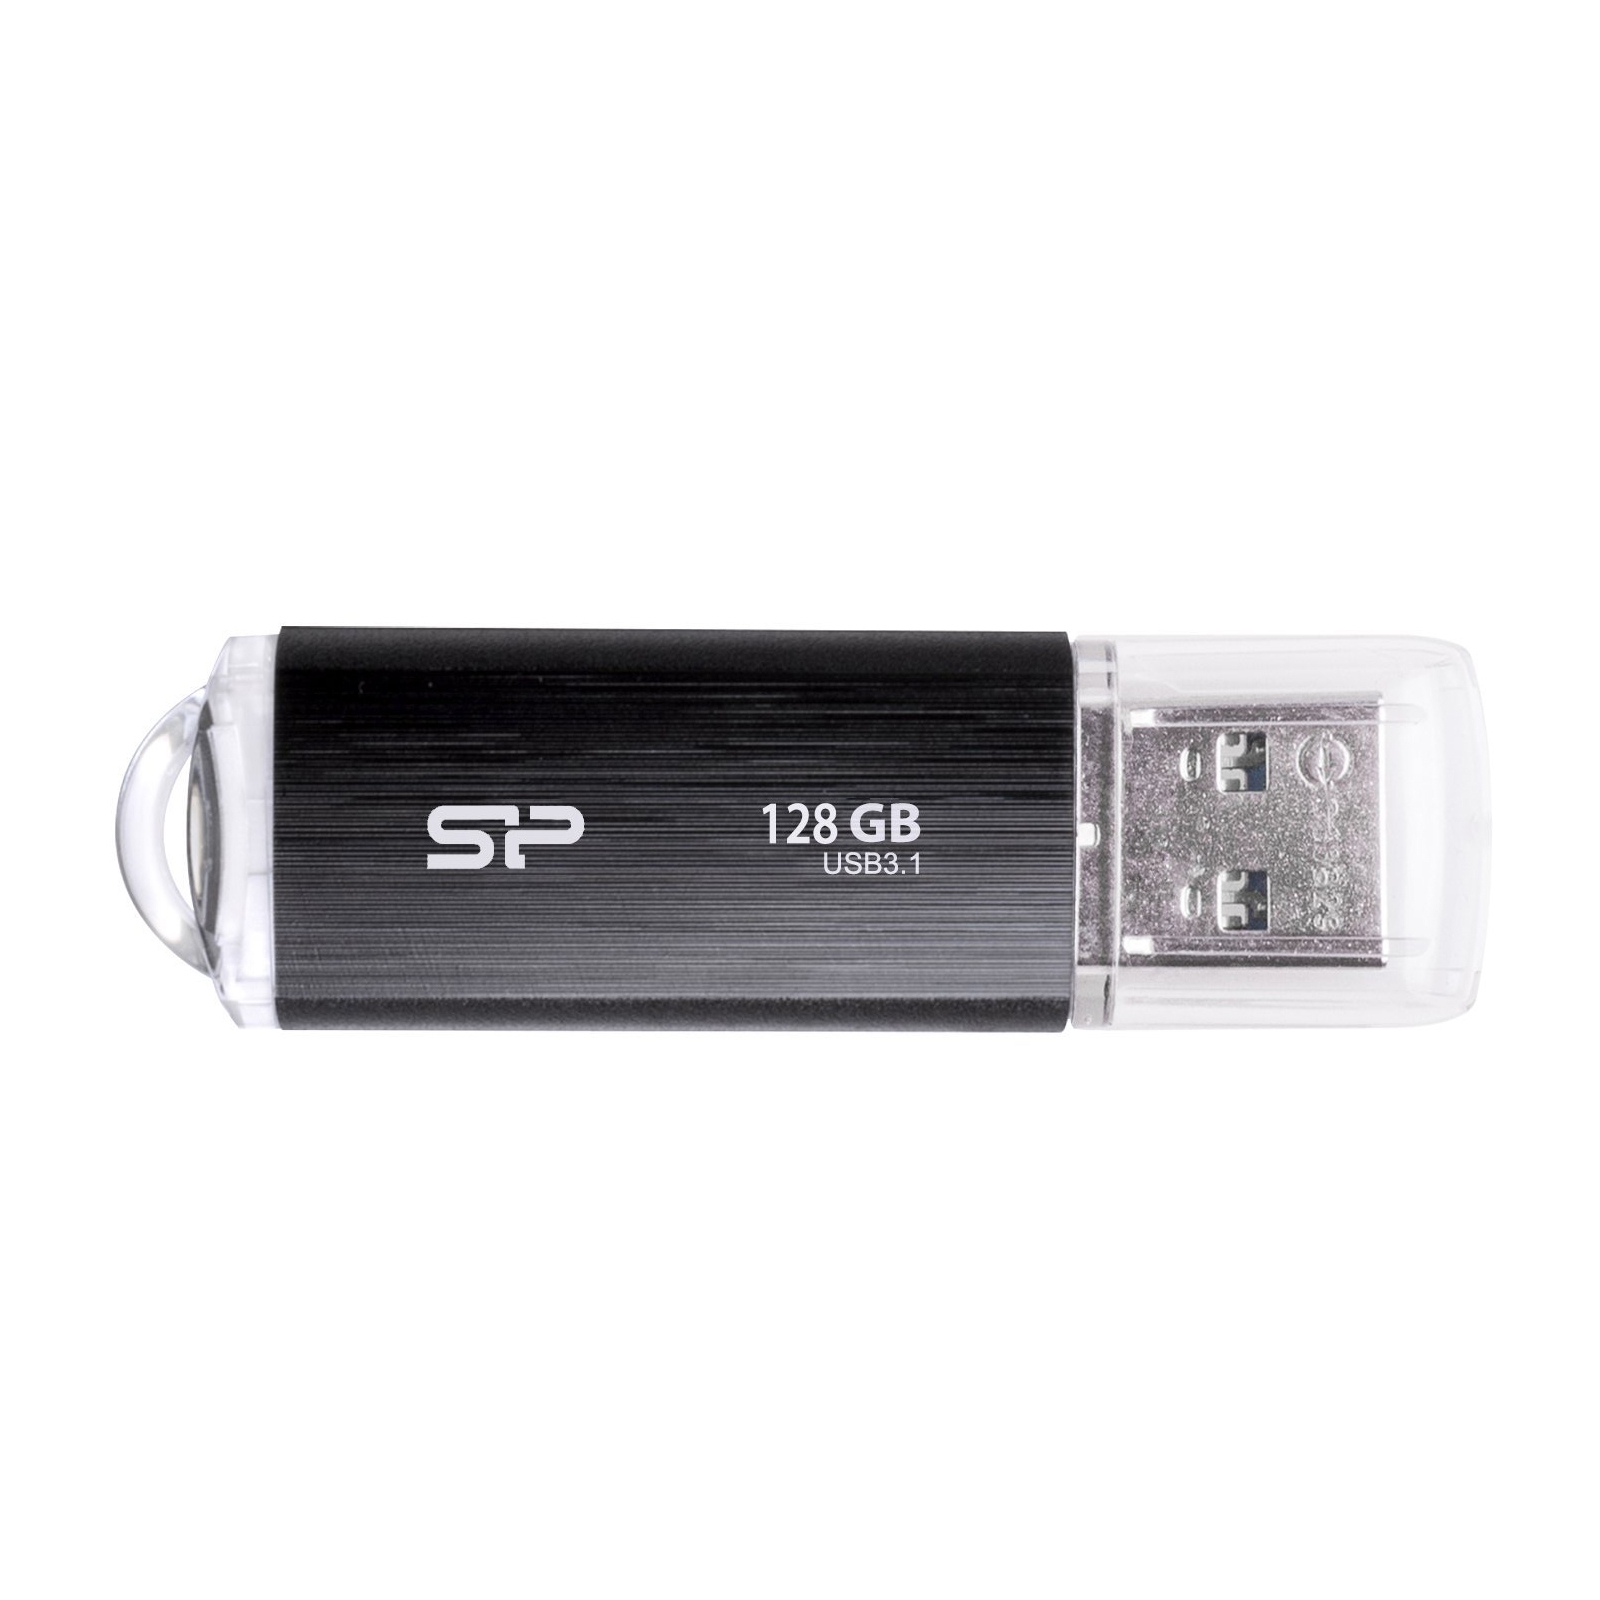 USB флеш накопитель Silicon Power 256GB Blaze b02 Black USB 3.0 (SP256GBUF3B02V1K)